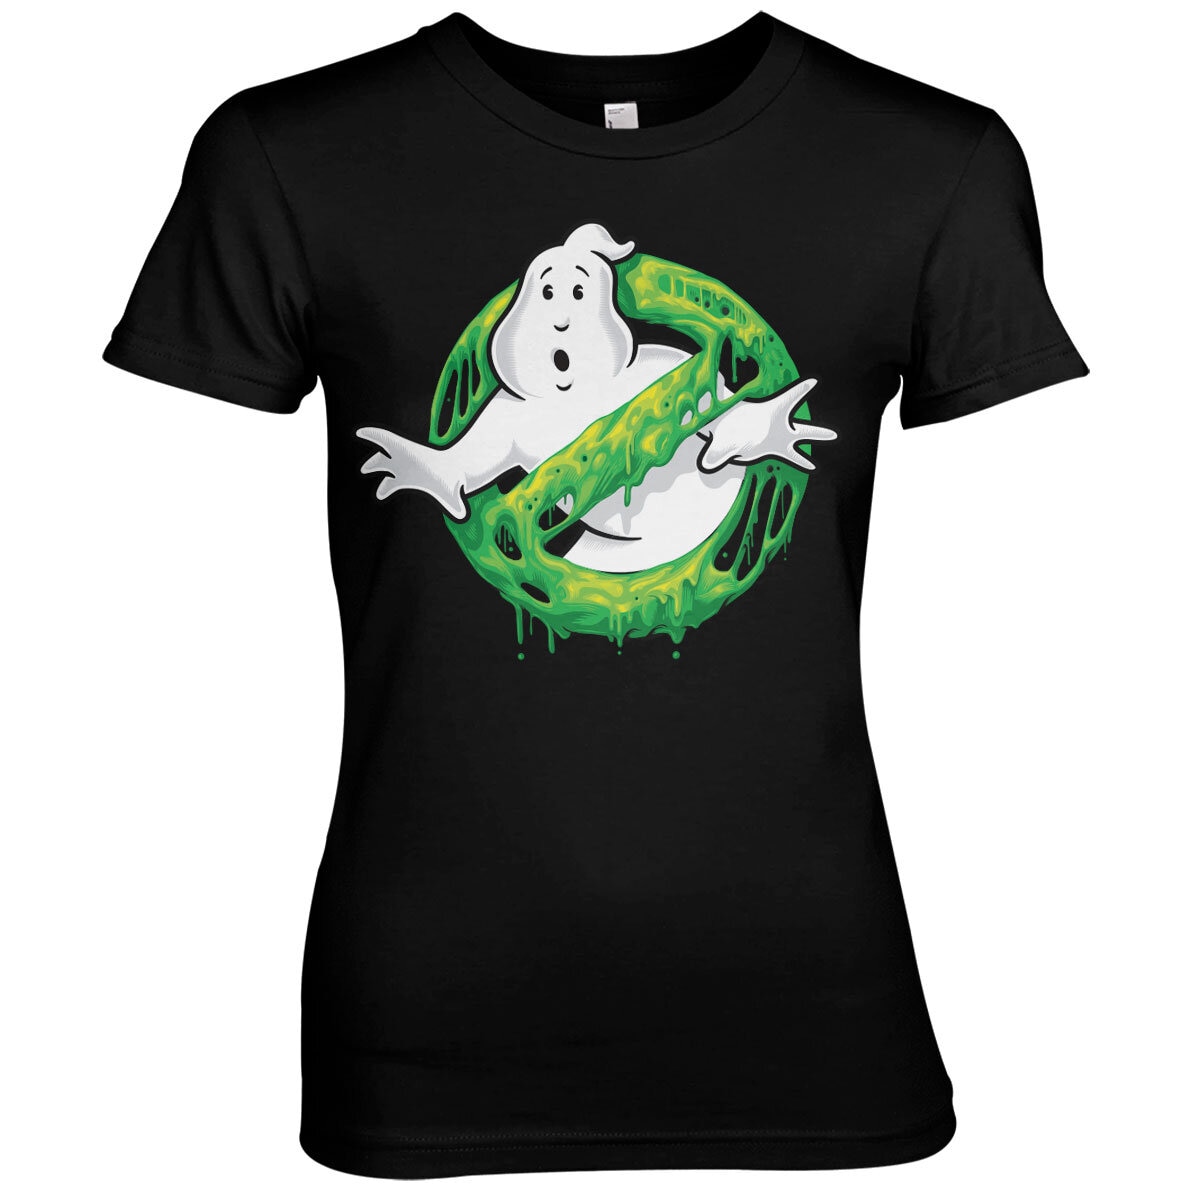 Ghostbusters Slime Logo Girly Tee